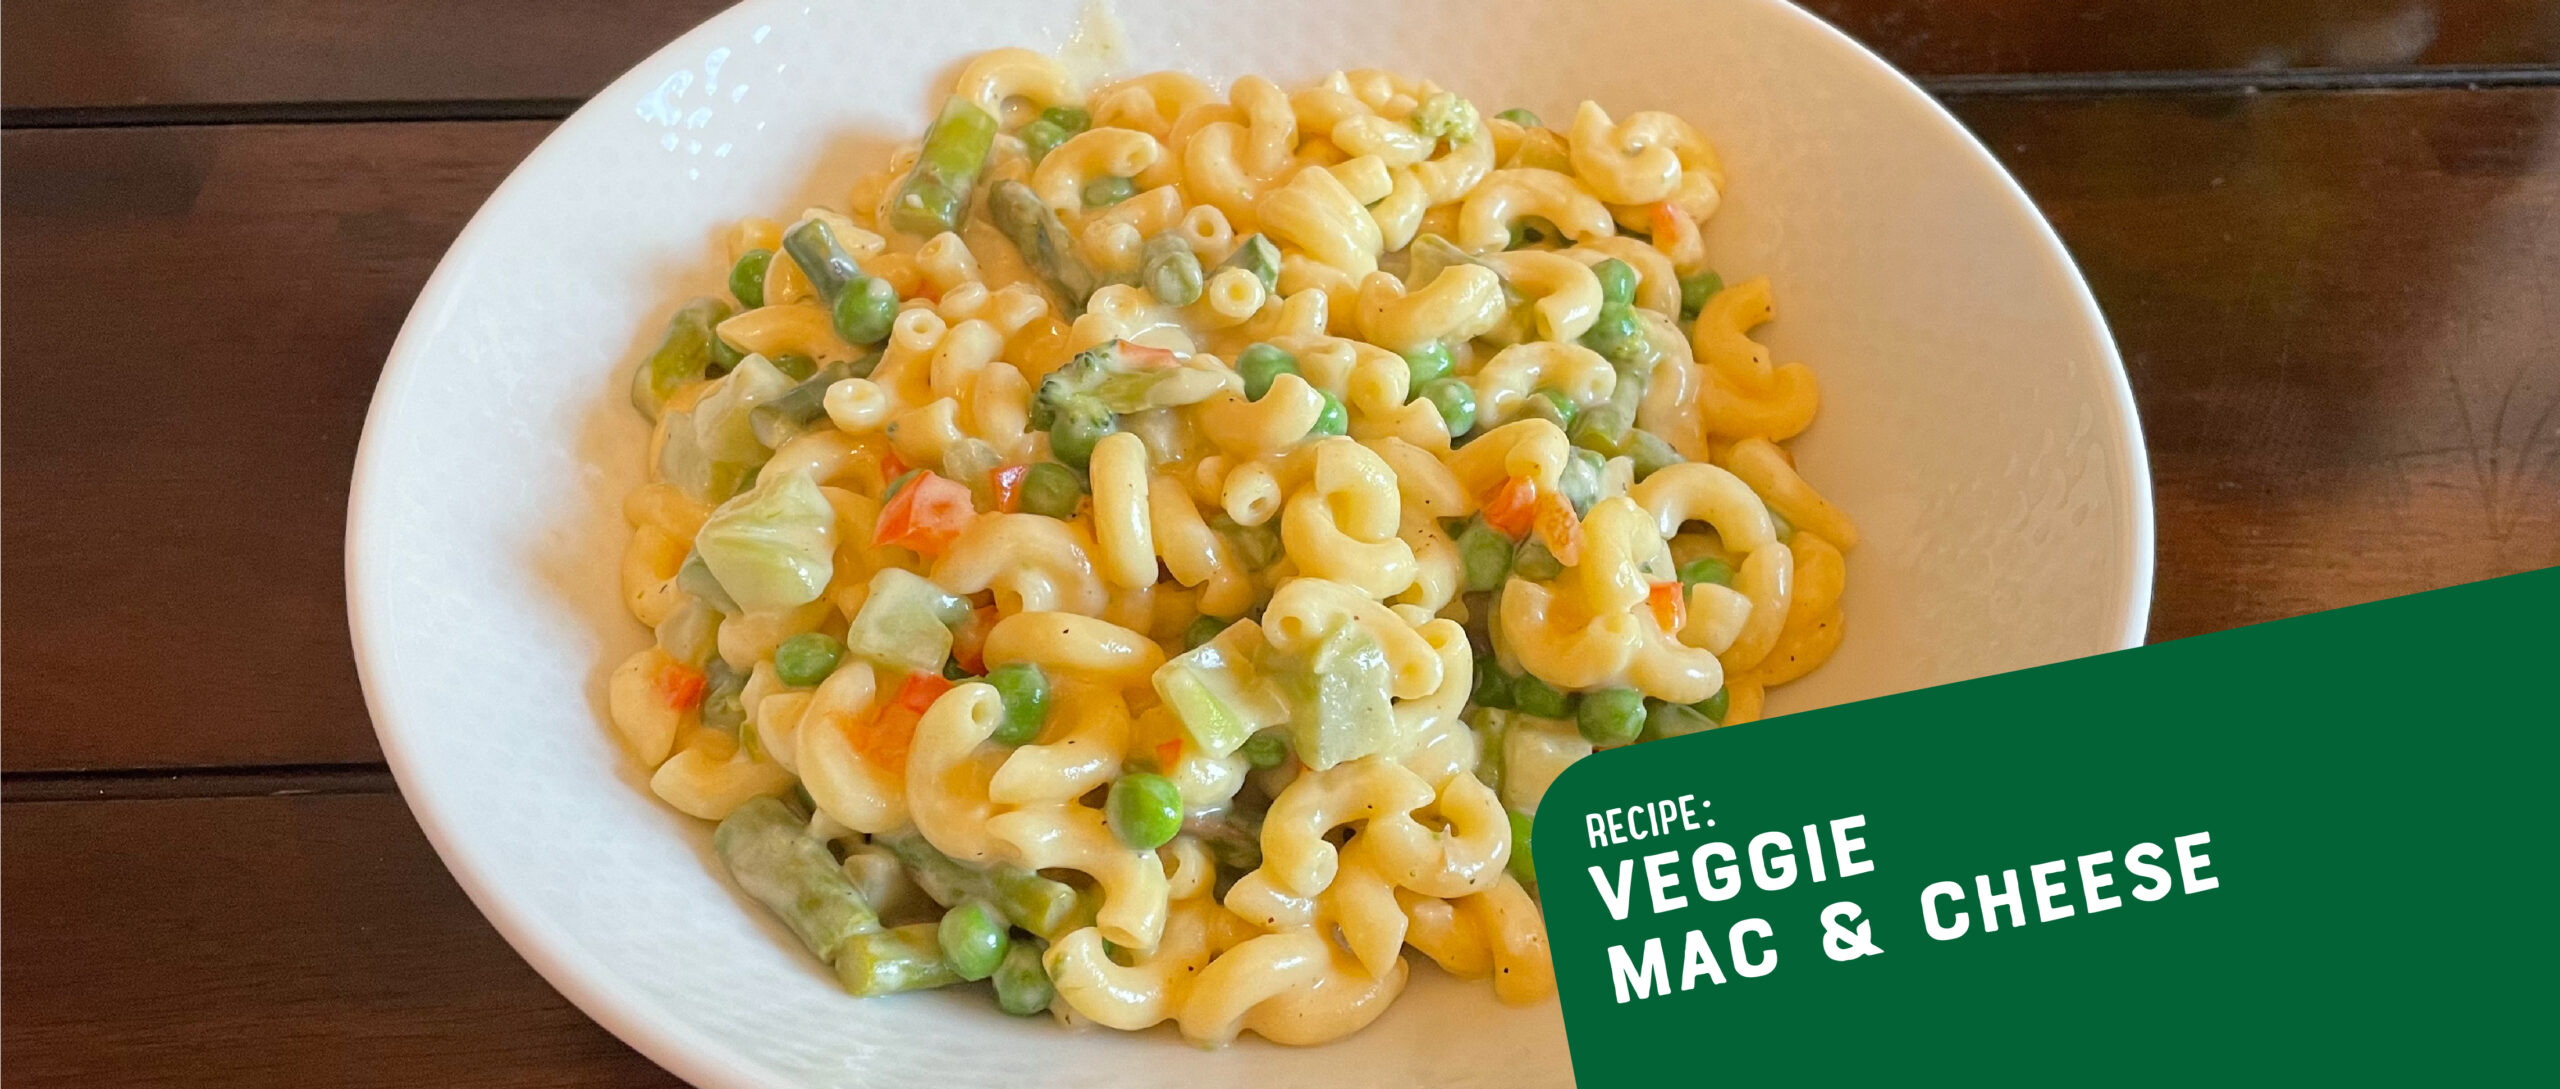 Veggie Mac & Cheese Recipe